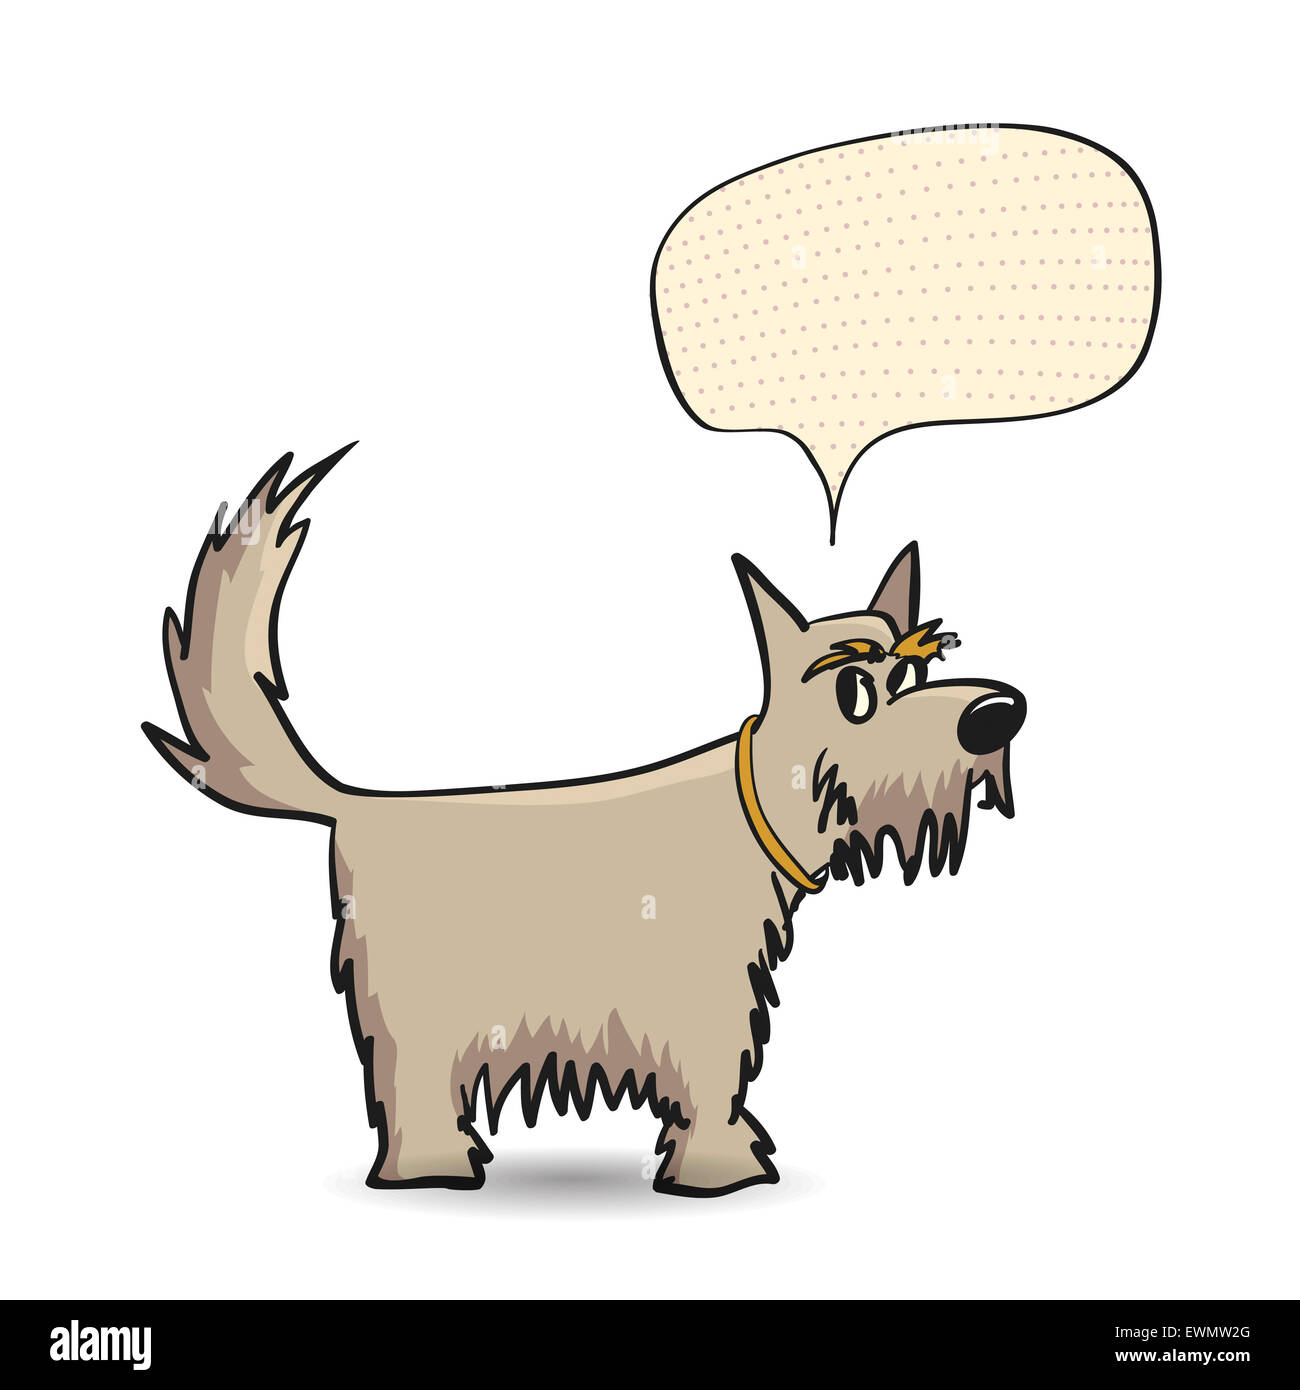 Funny dog with speech bubble. Cartoon illustration of animal character. Stock Photo